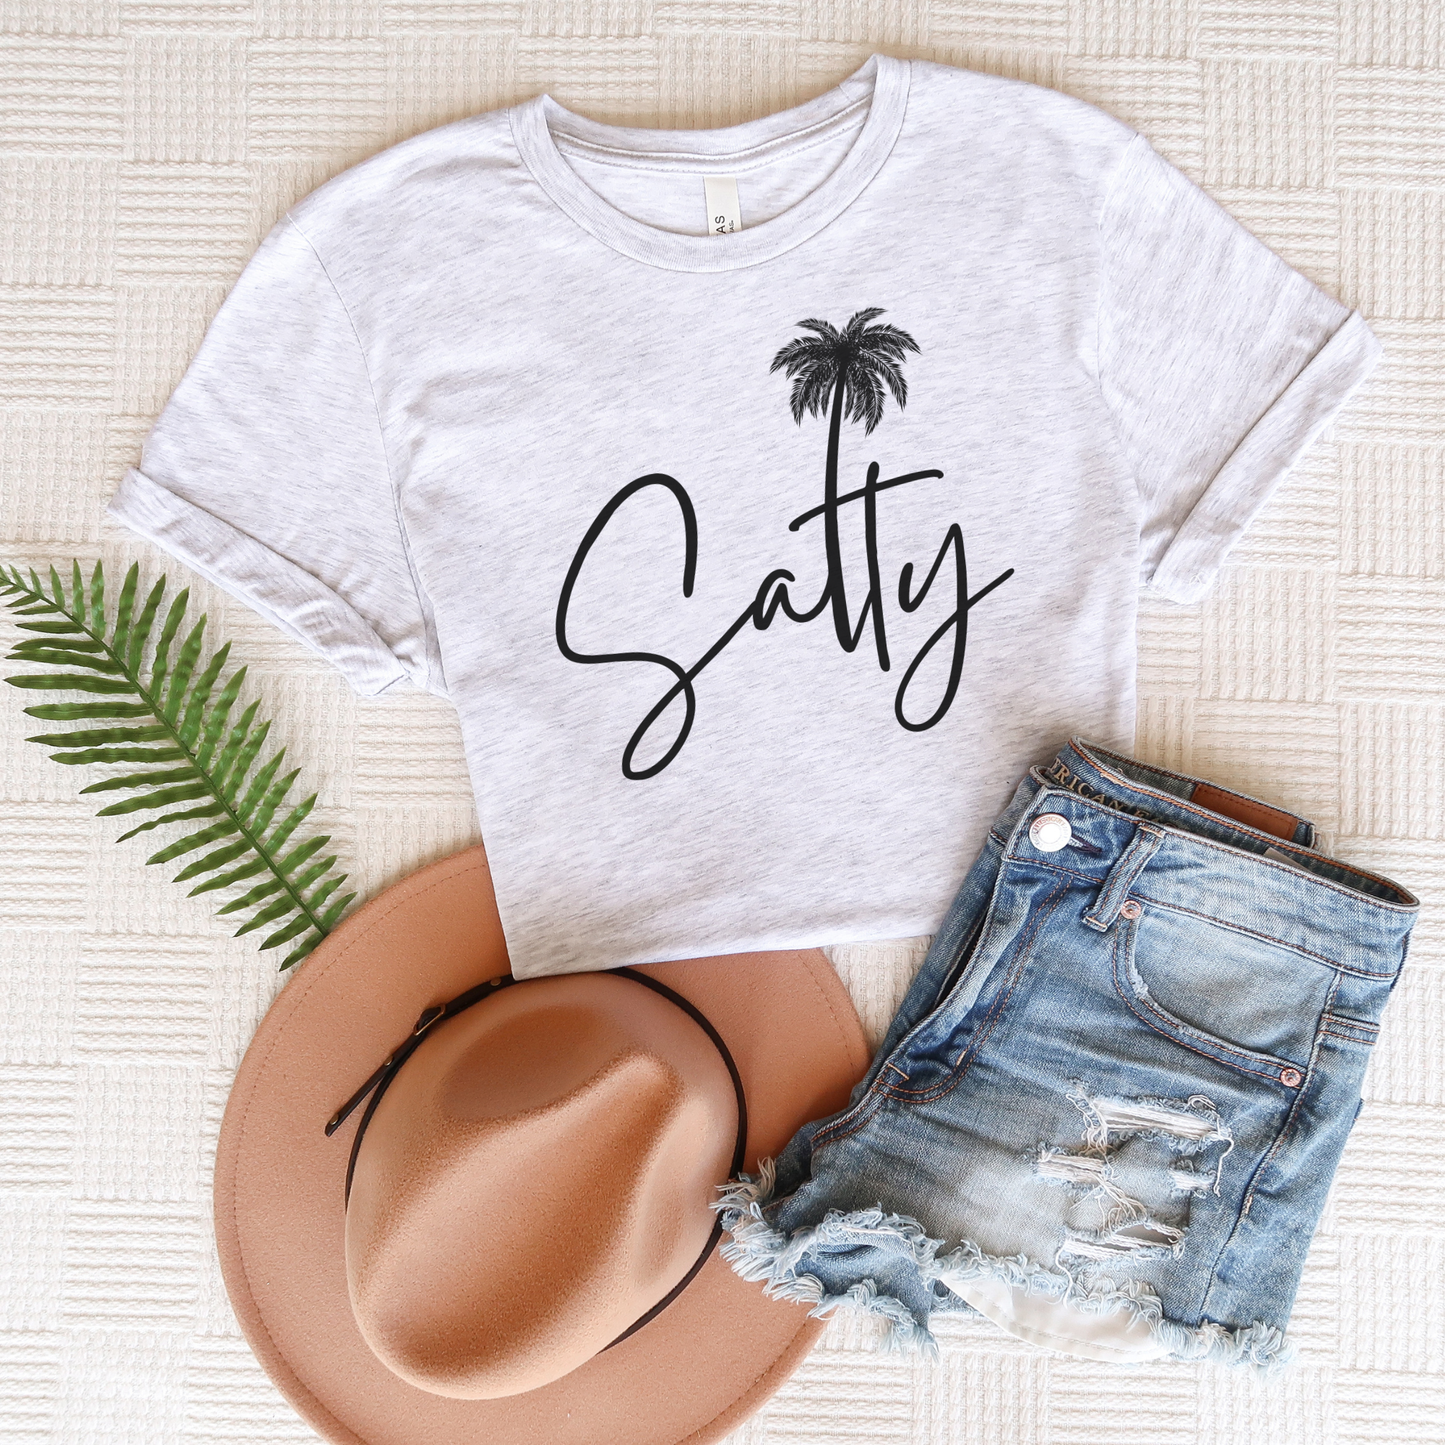 Trendznmore - Salty Beach Graphic T-Shirt: Large / Stonewash Blue $38